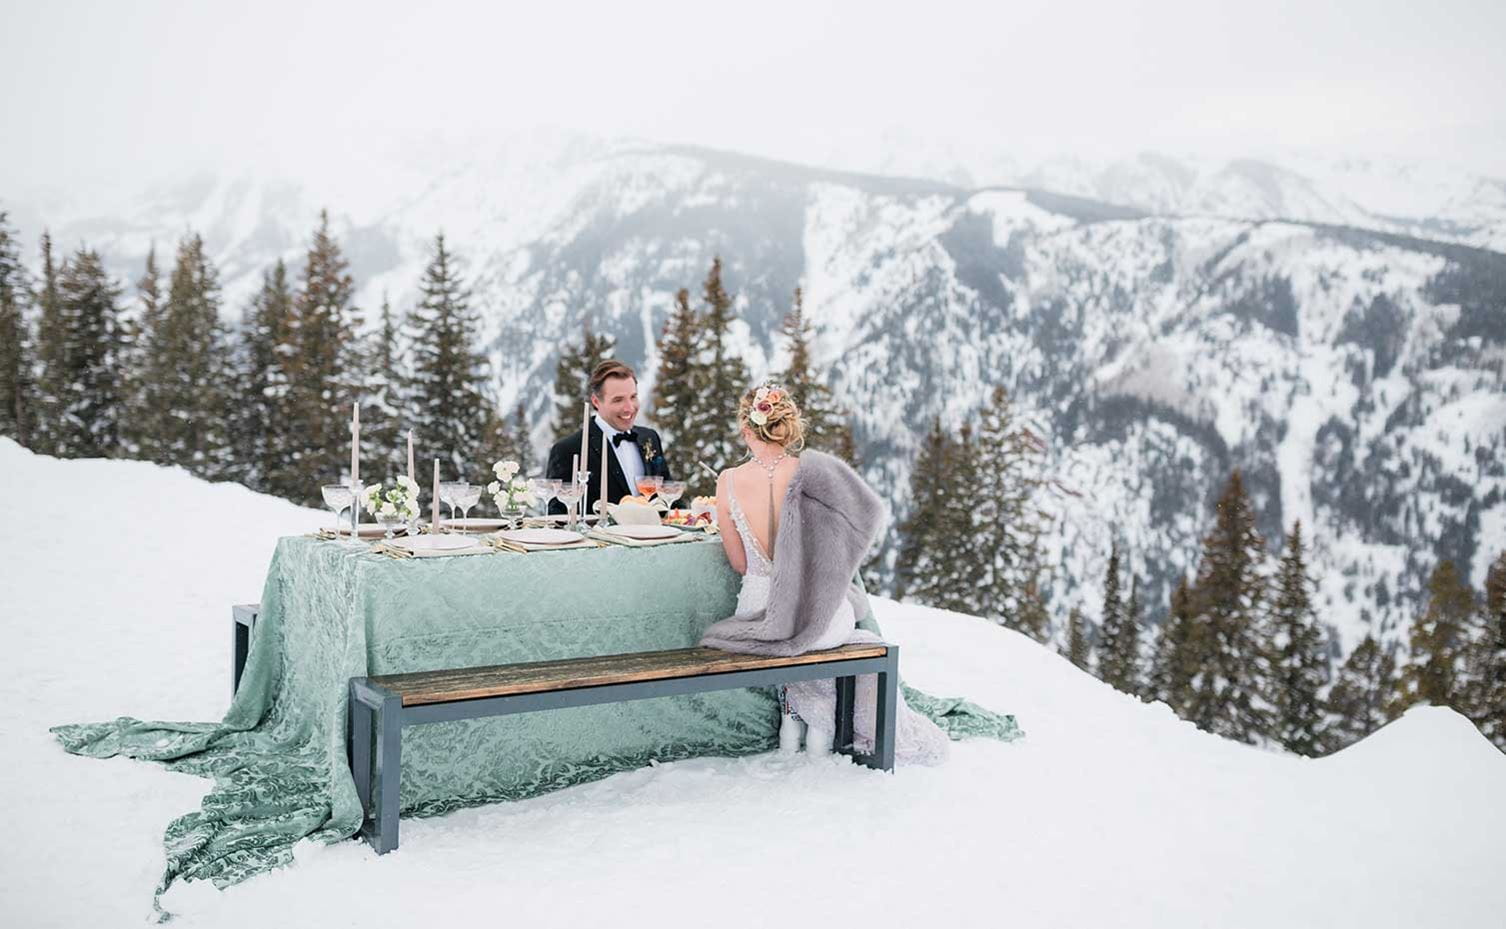 An Aspen Winter wedding at Cloud Nine Alpine Bistro